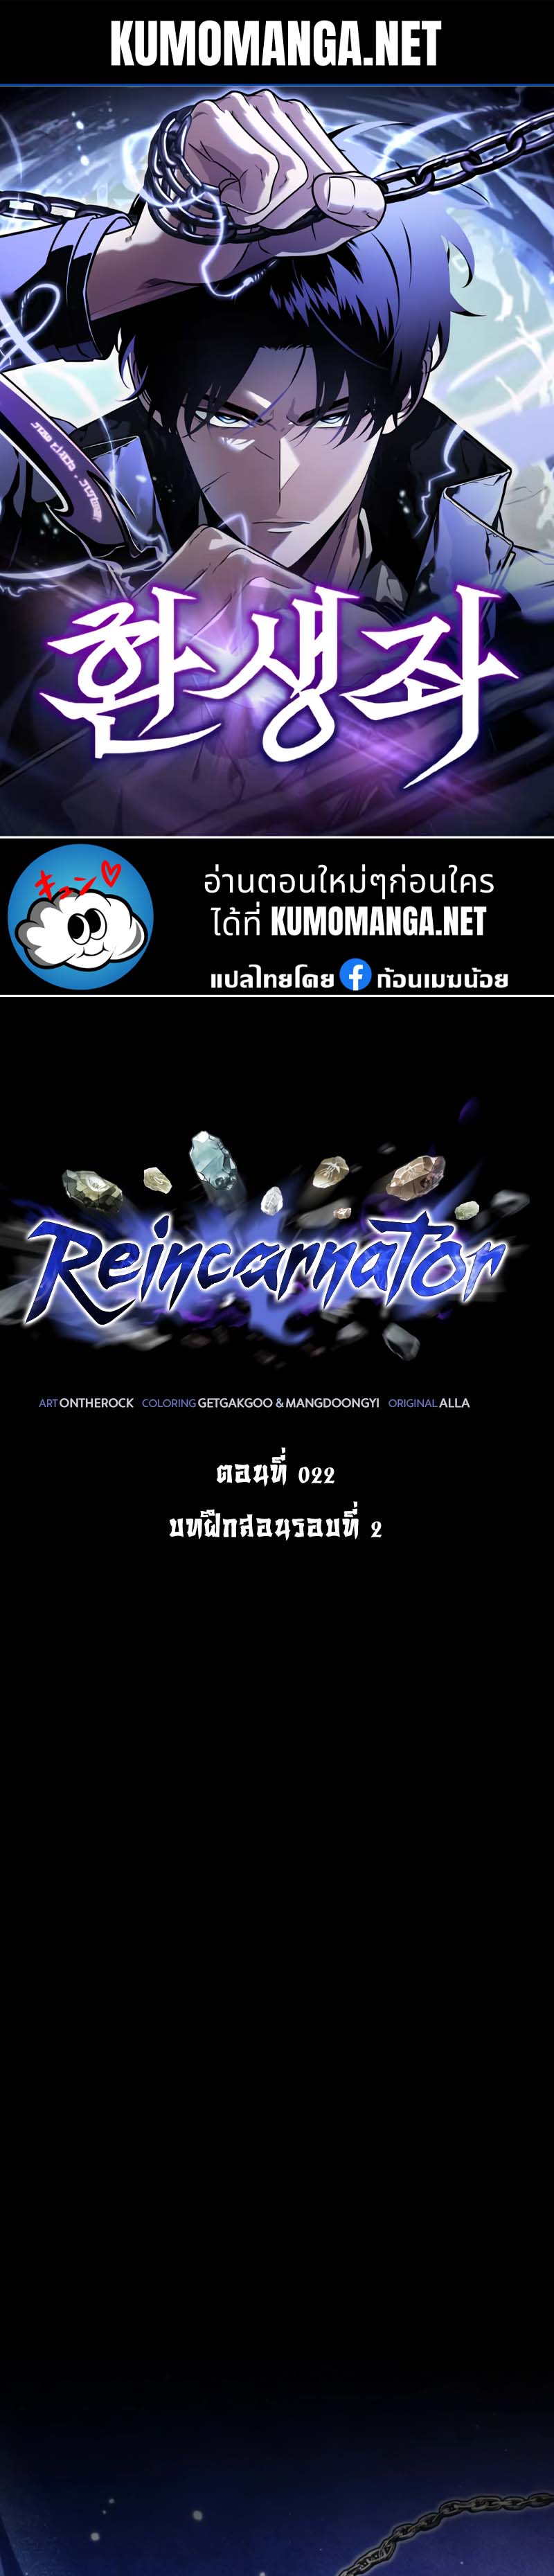 Reincarnator 22 (1) 001